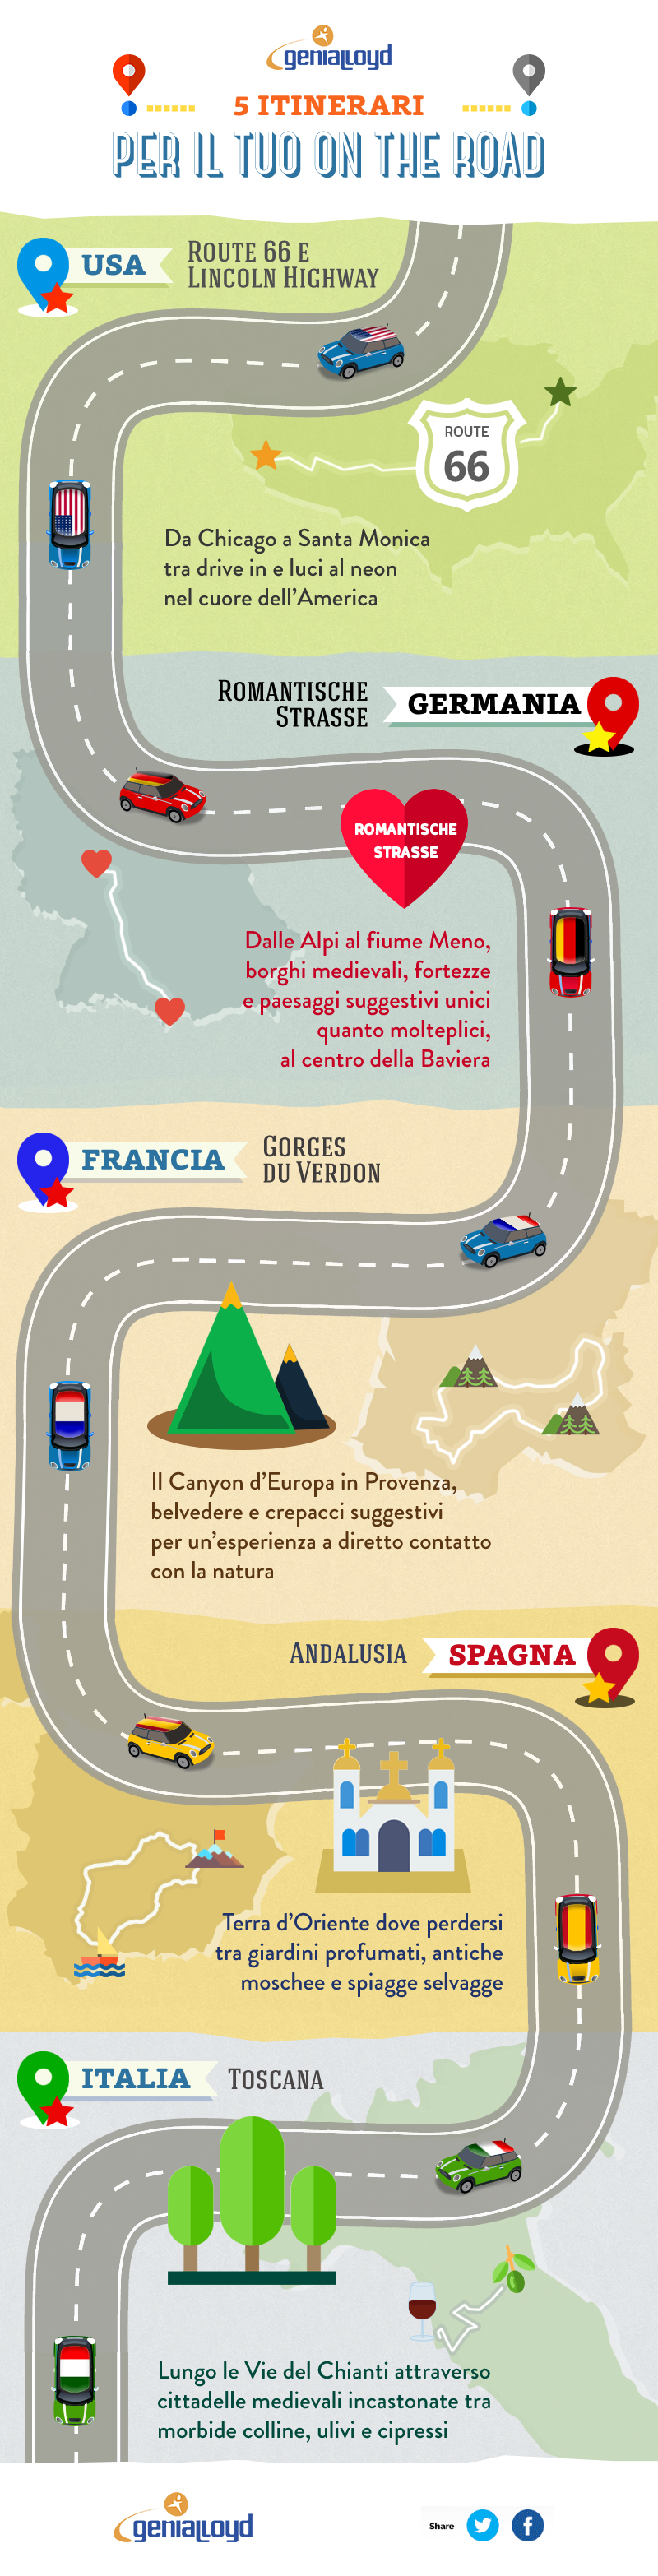 Infografica viaggi on the road